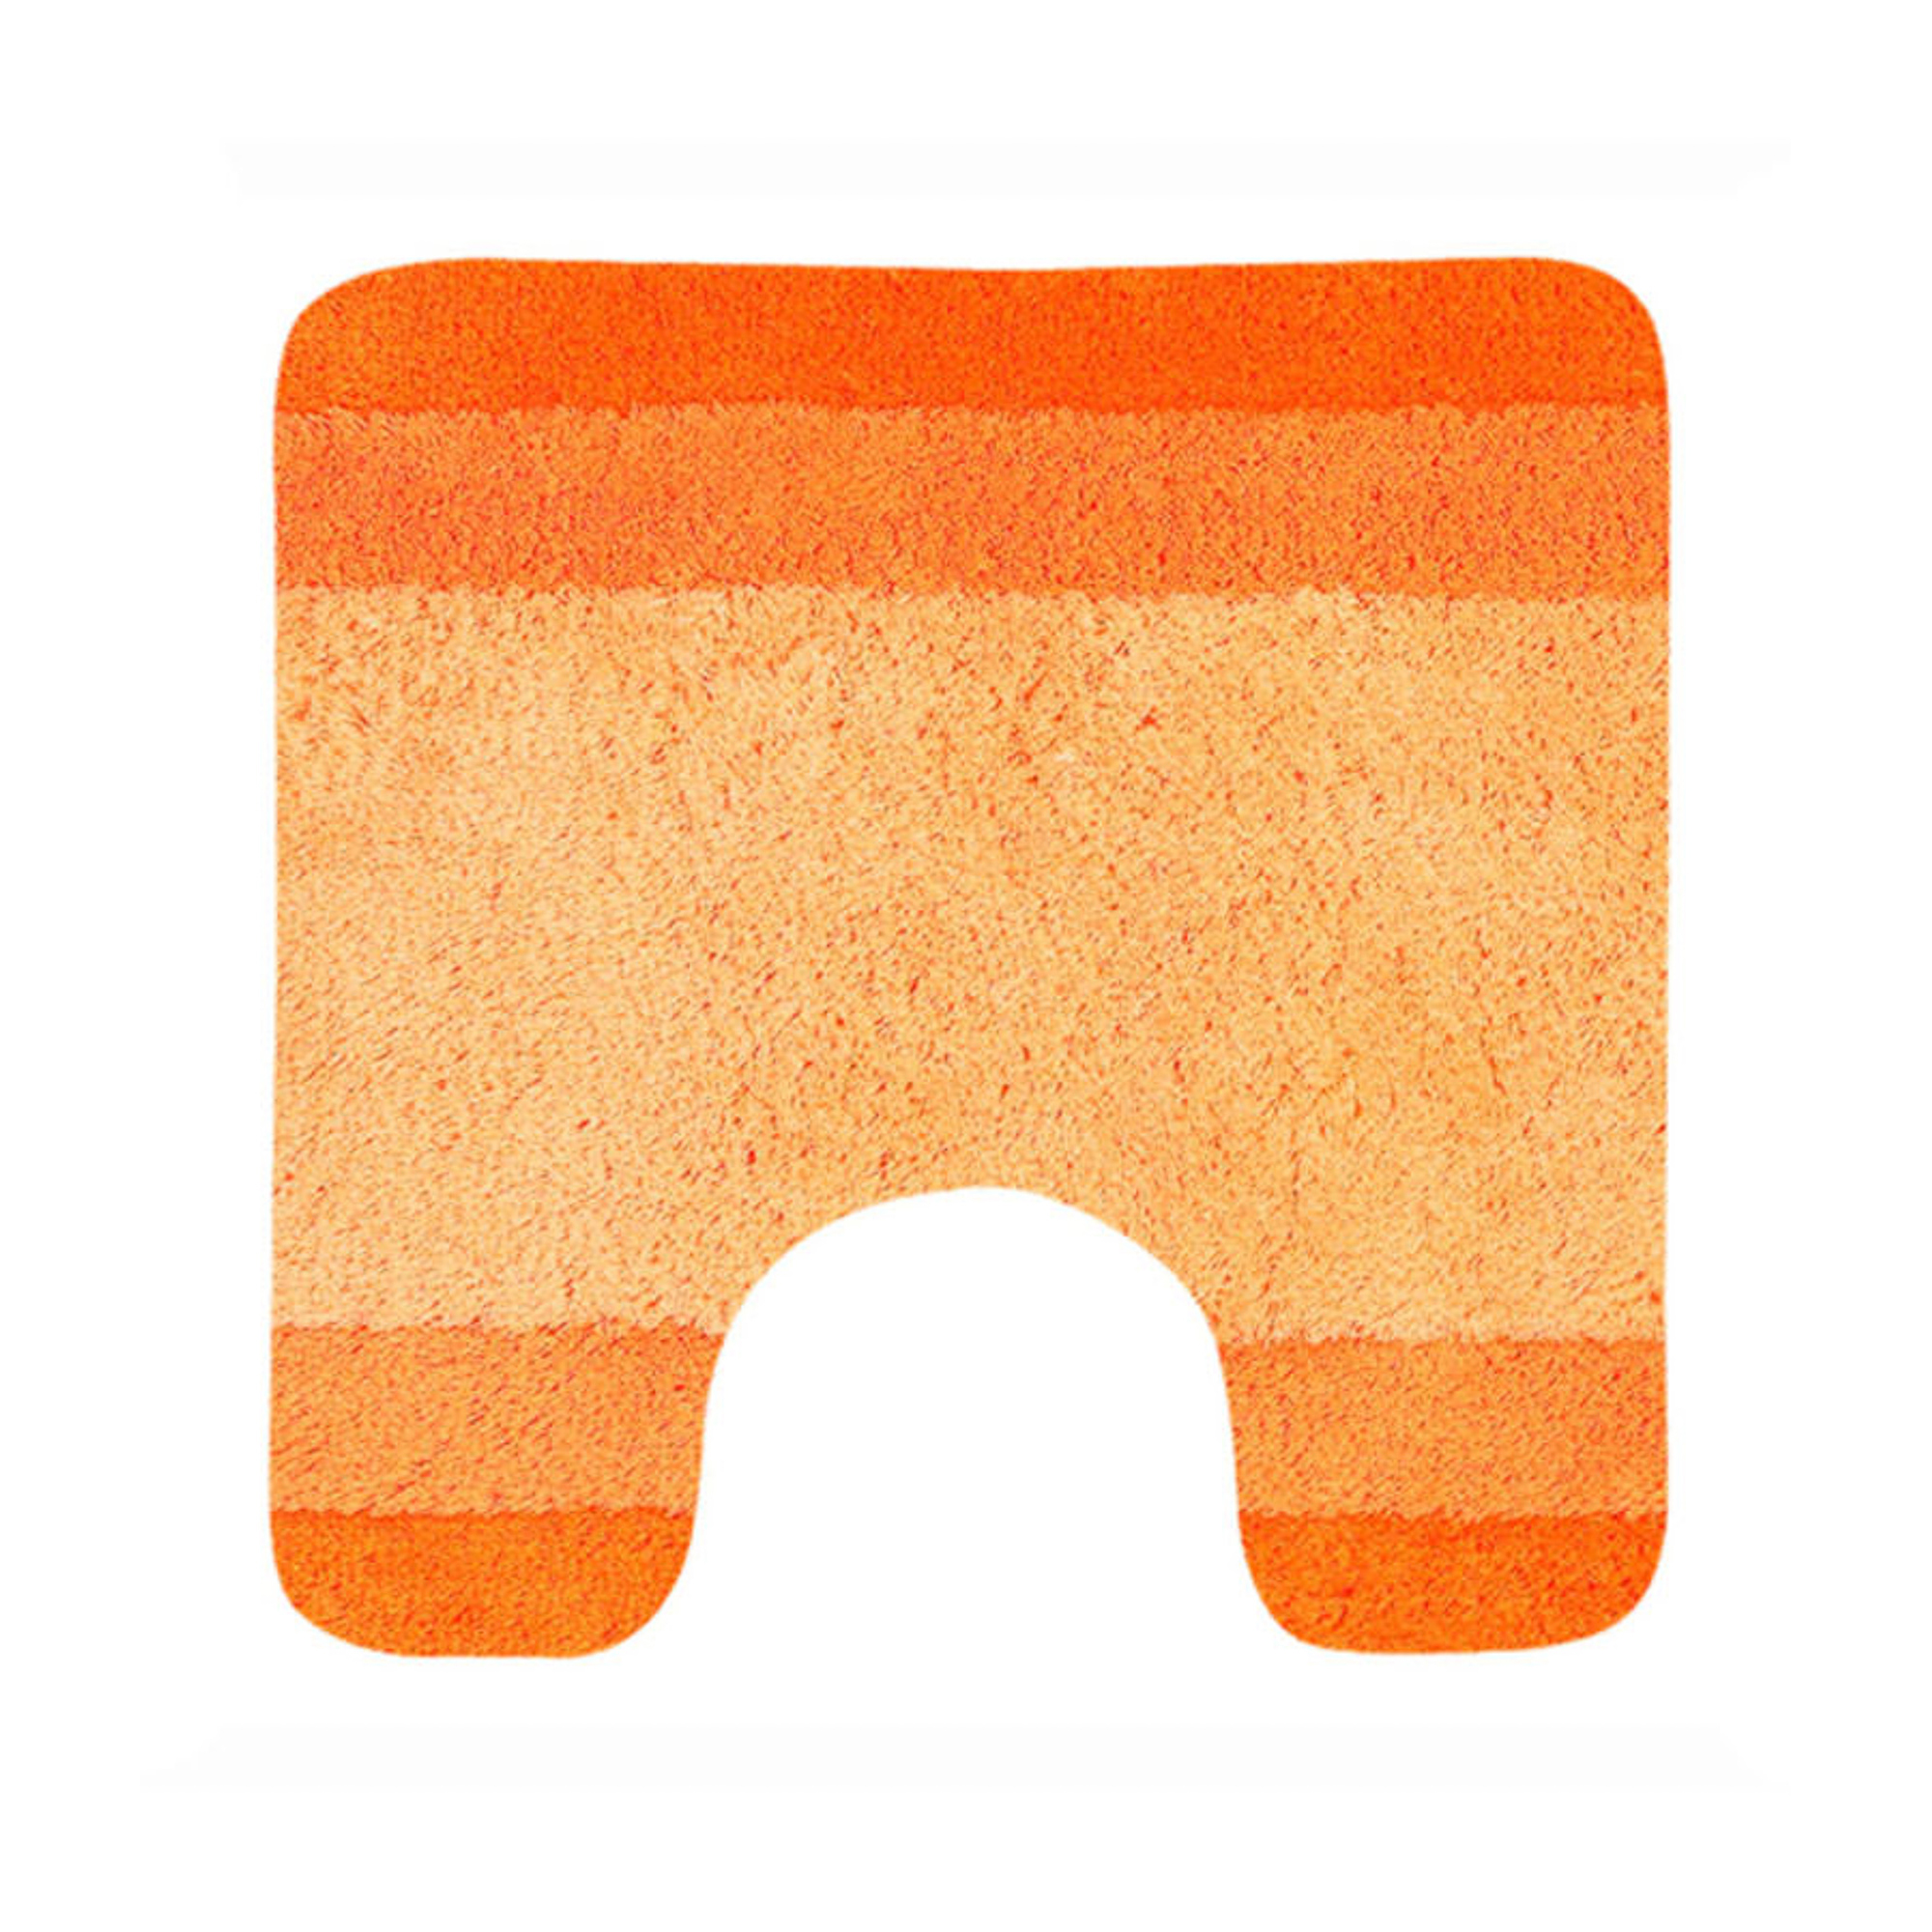 фото Коврик для туалета spirella balance оранжевый 55х55 см